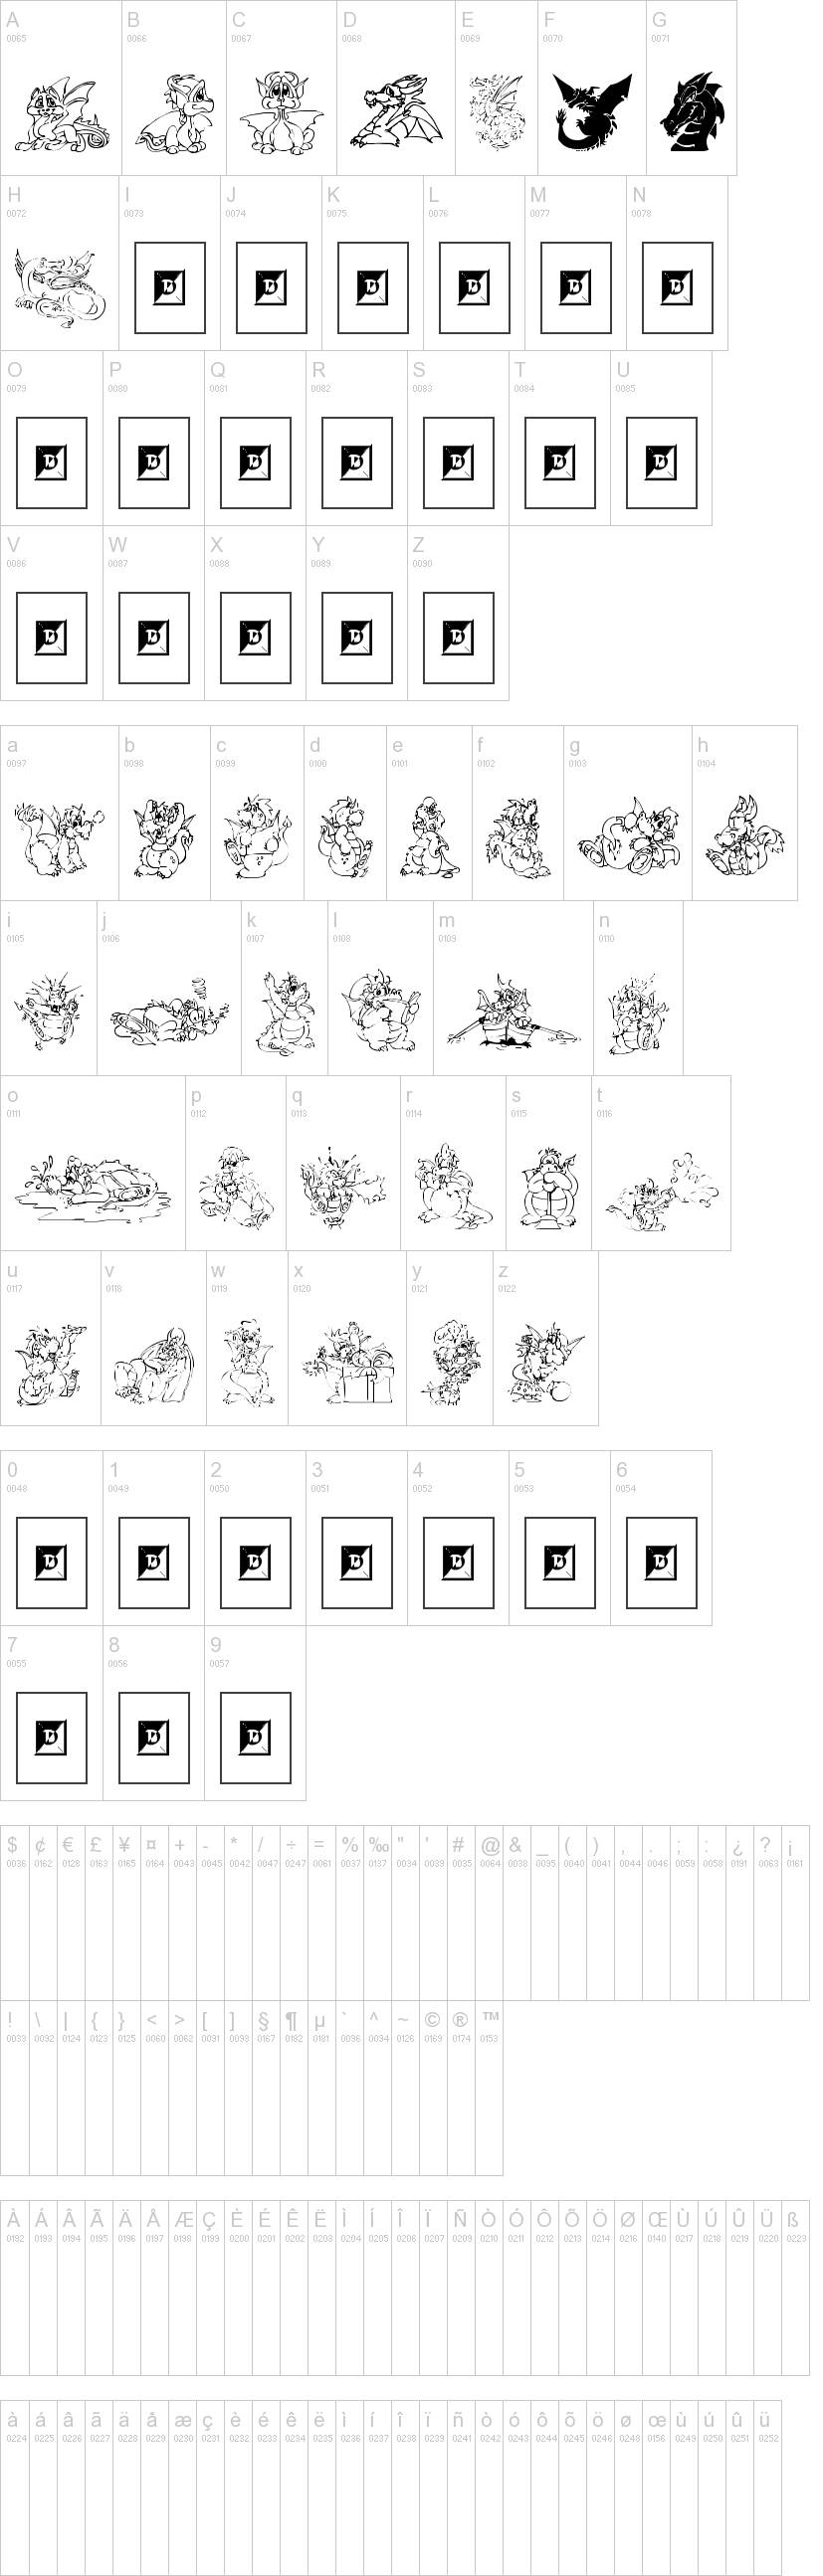 Delightful Lil Dragons字符映射图